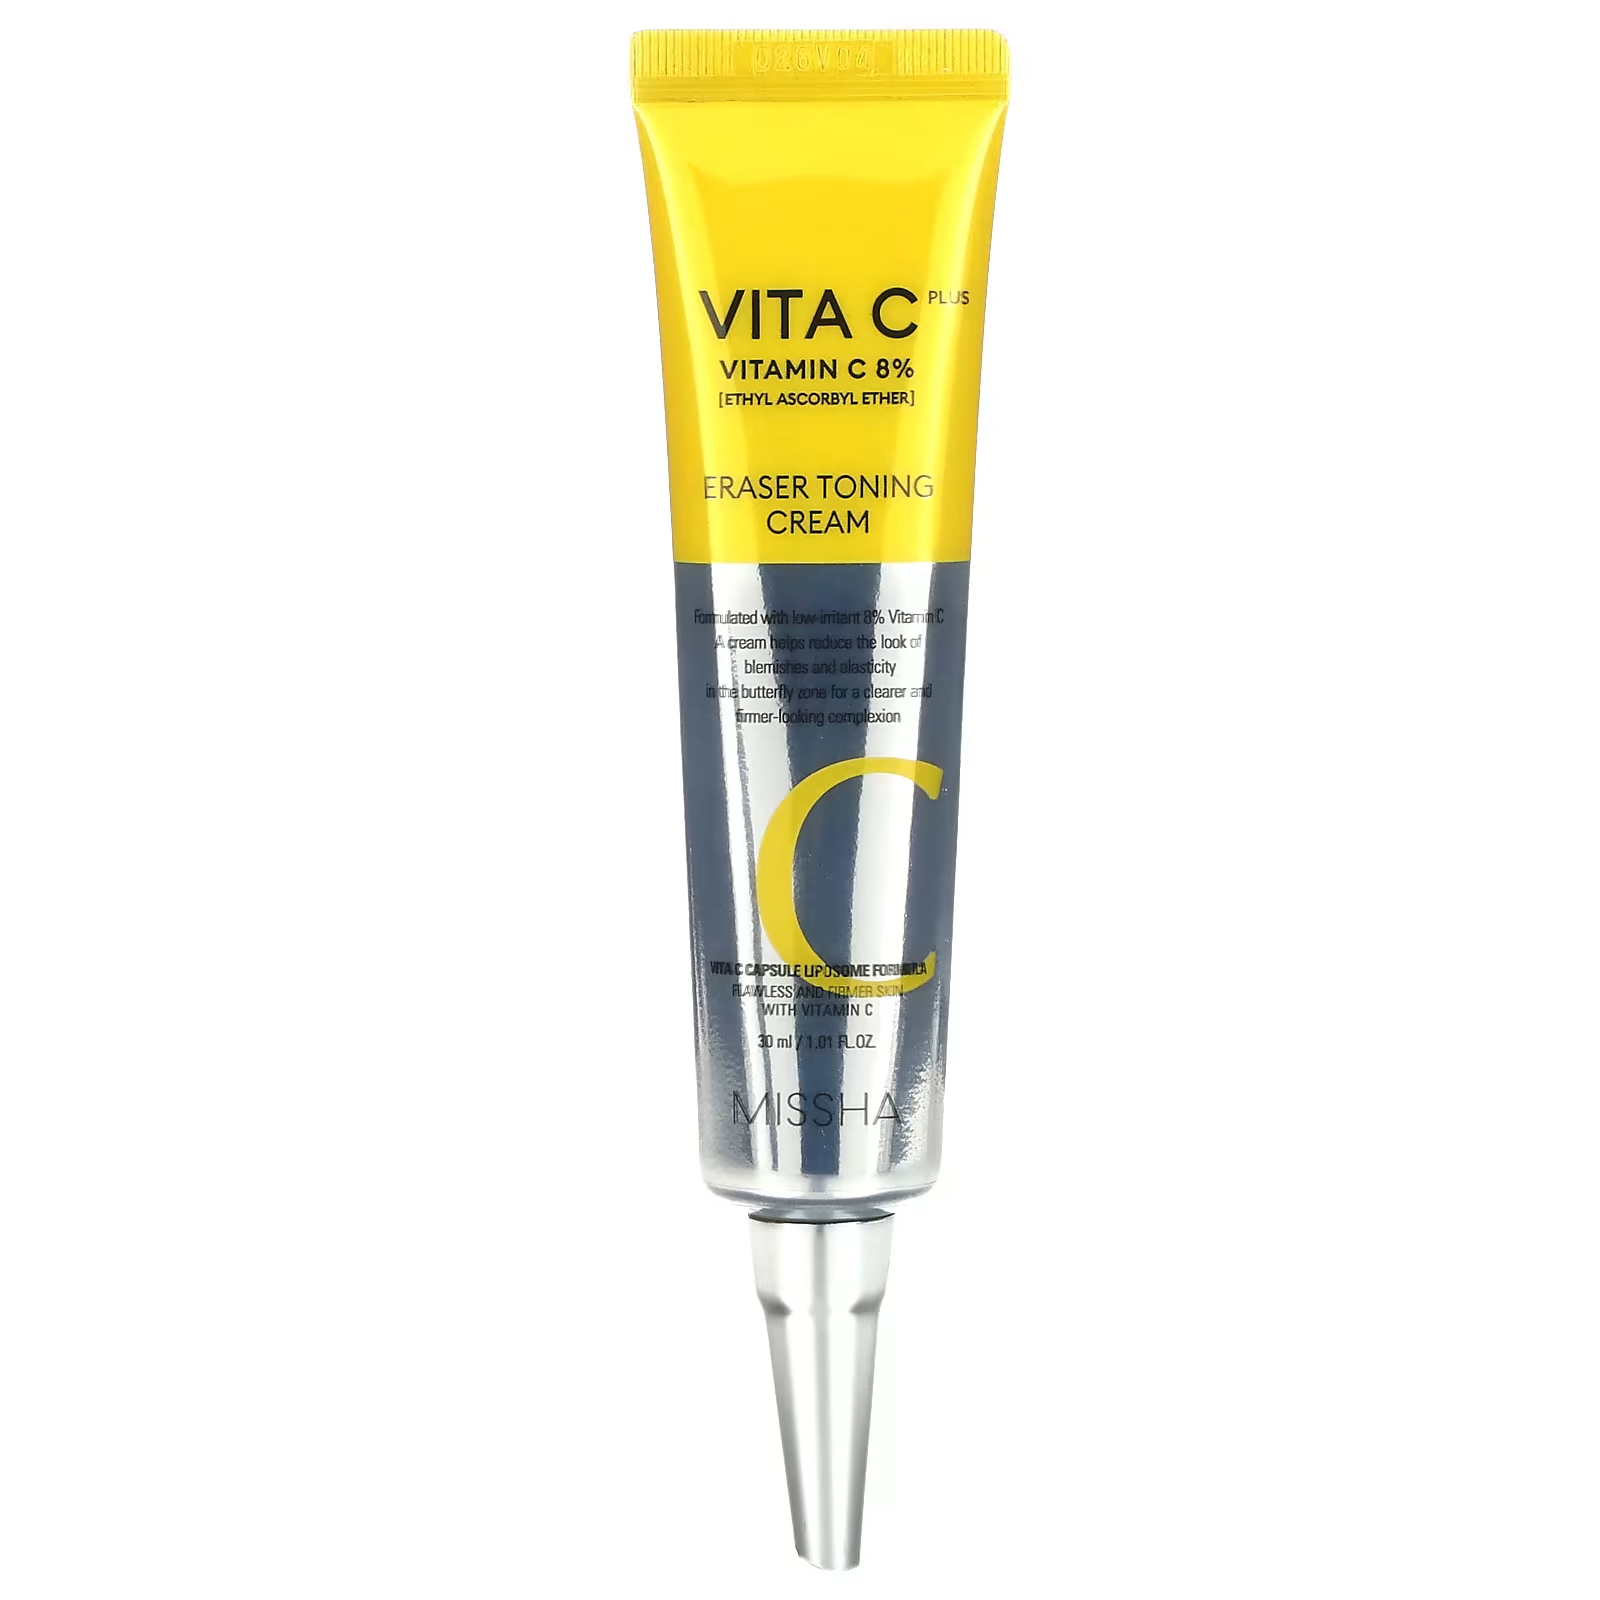 Тонизирующий крем Missha Vita C Plus, 30 мл. крем ластик для лица missha vita c plus eraser toning cream 30 мл